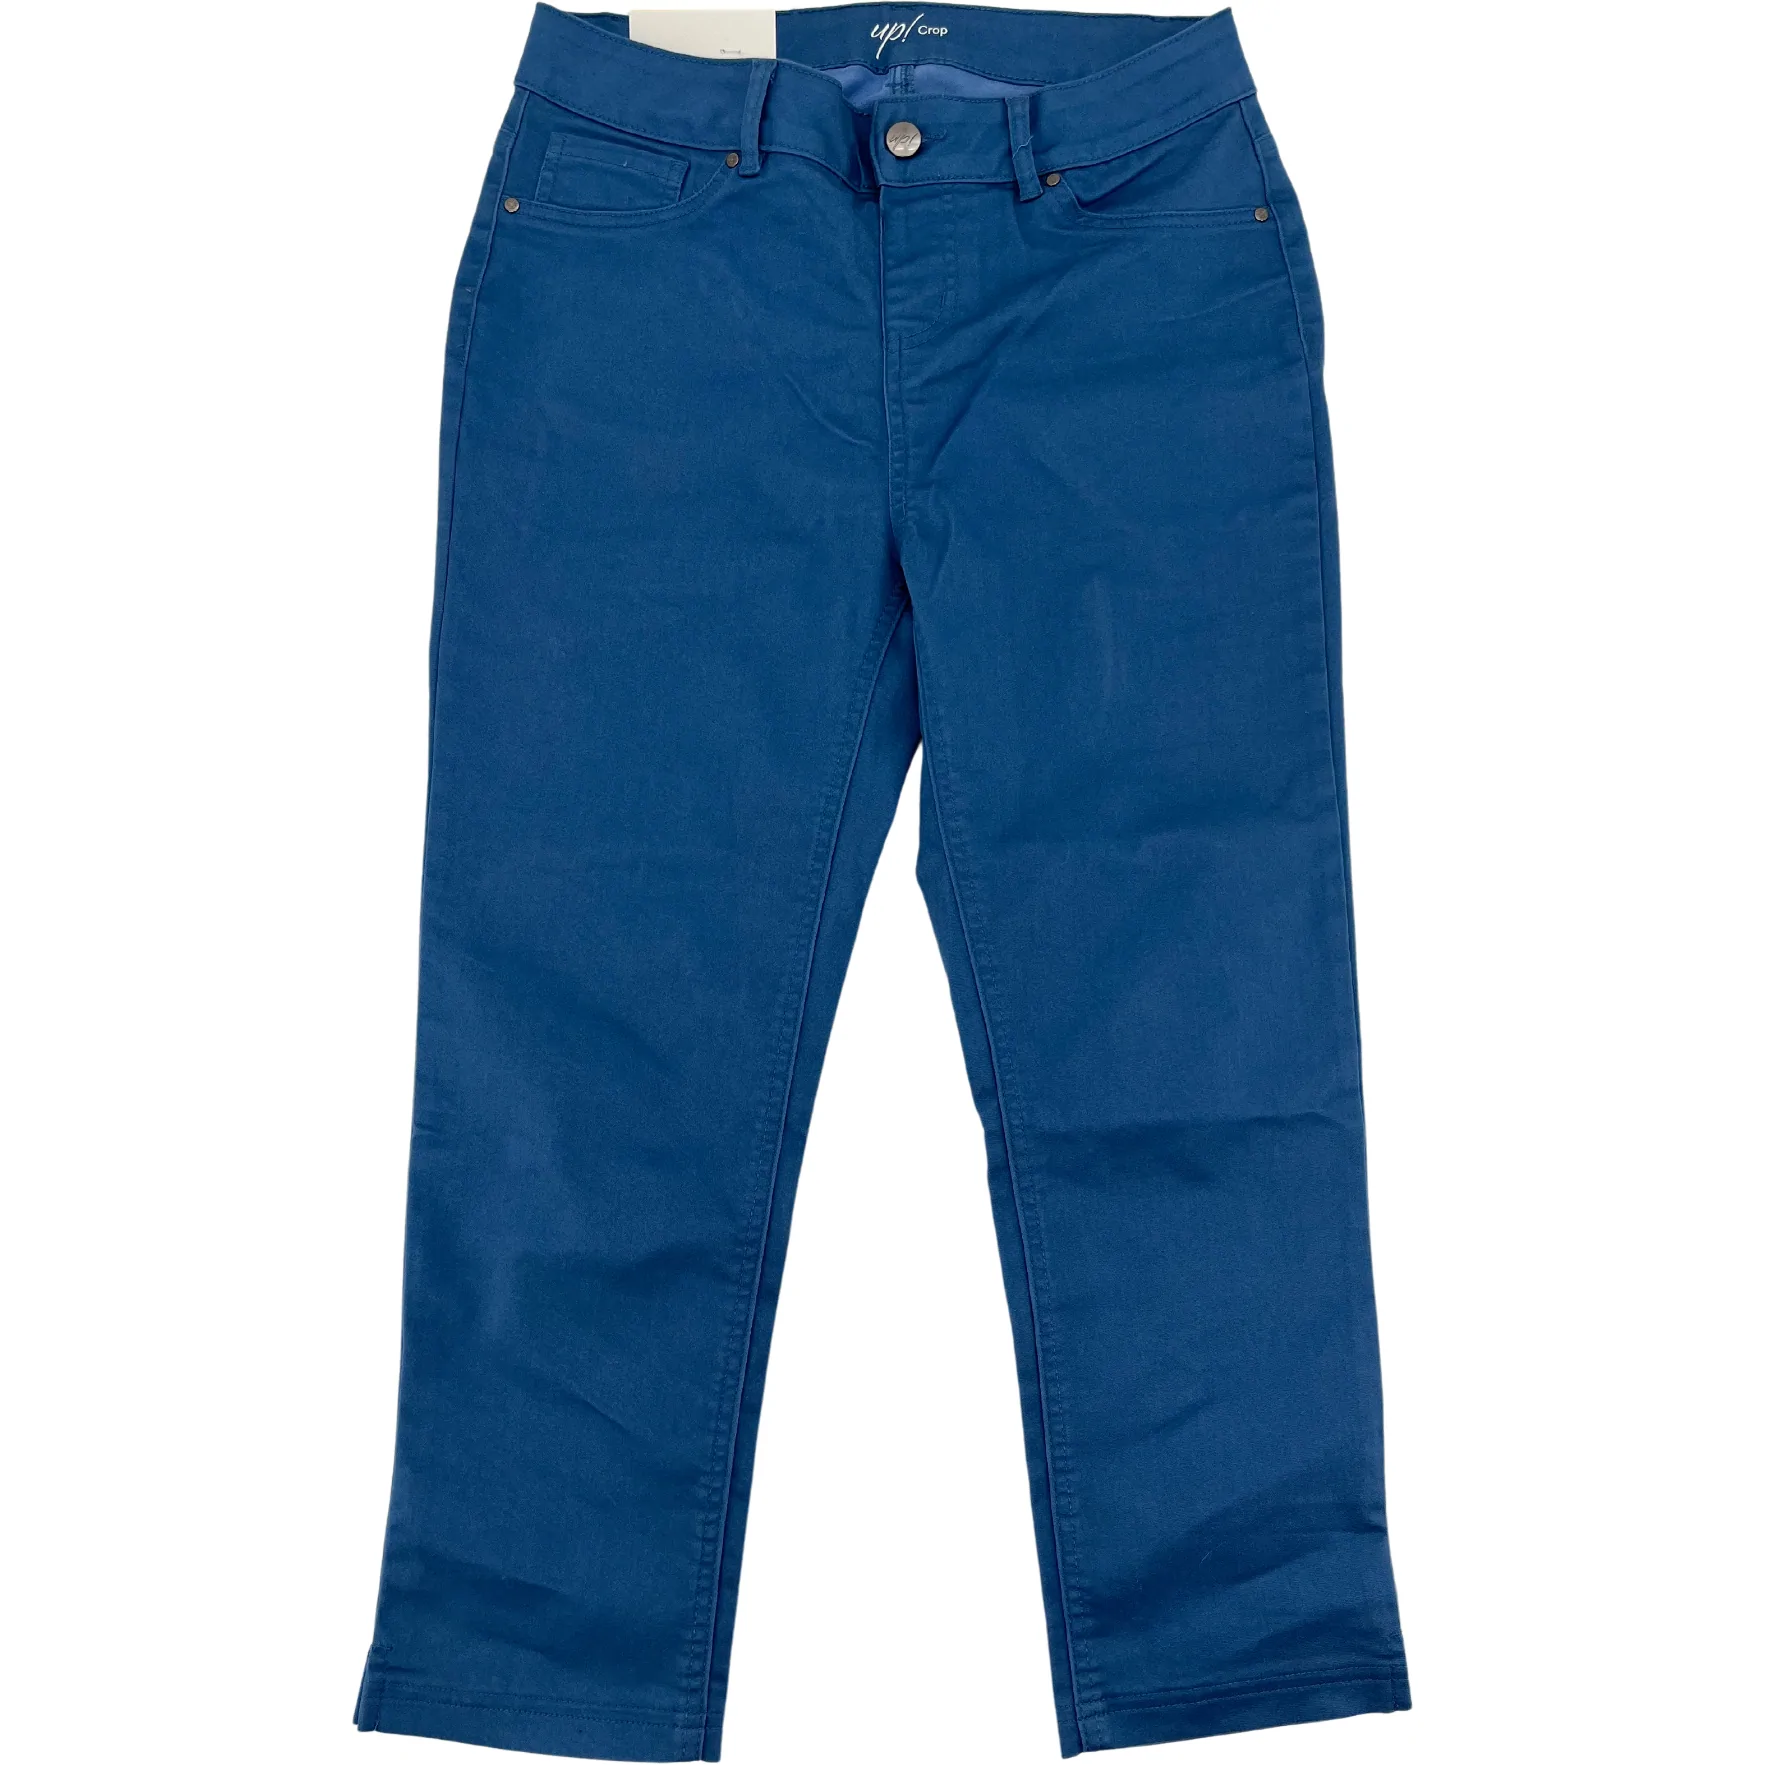 Up! Women's Capri Pants: Denim Style / Cropped Pants / Blue / Size 6